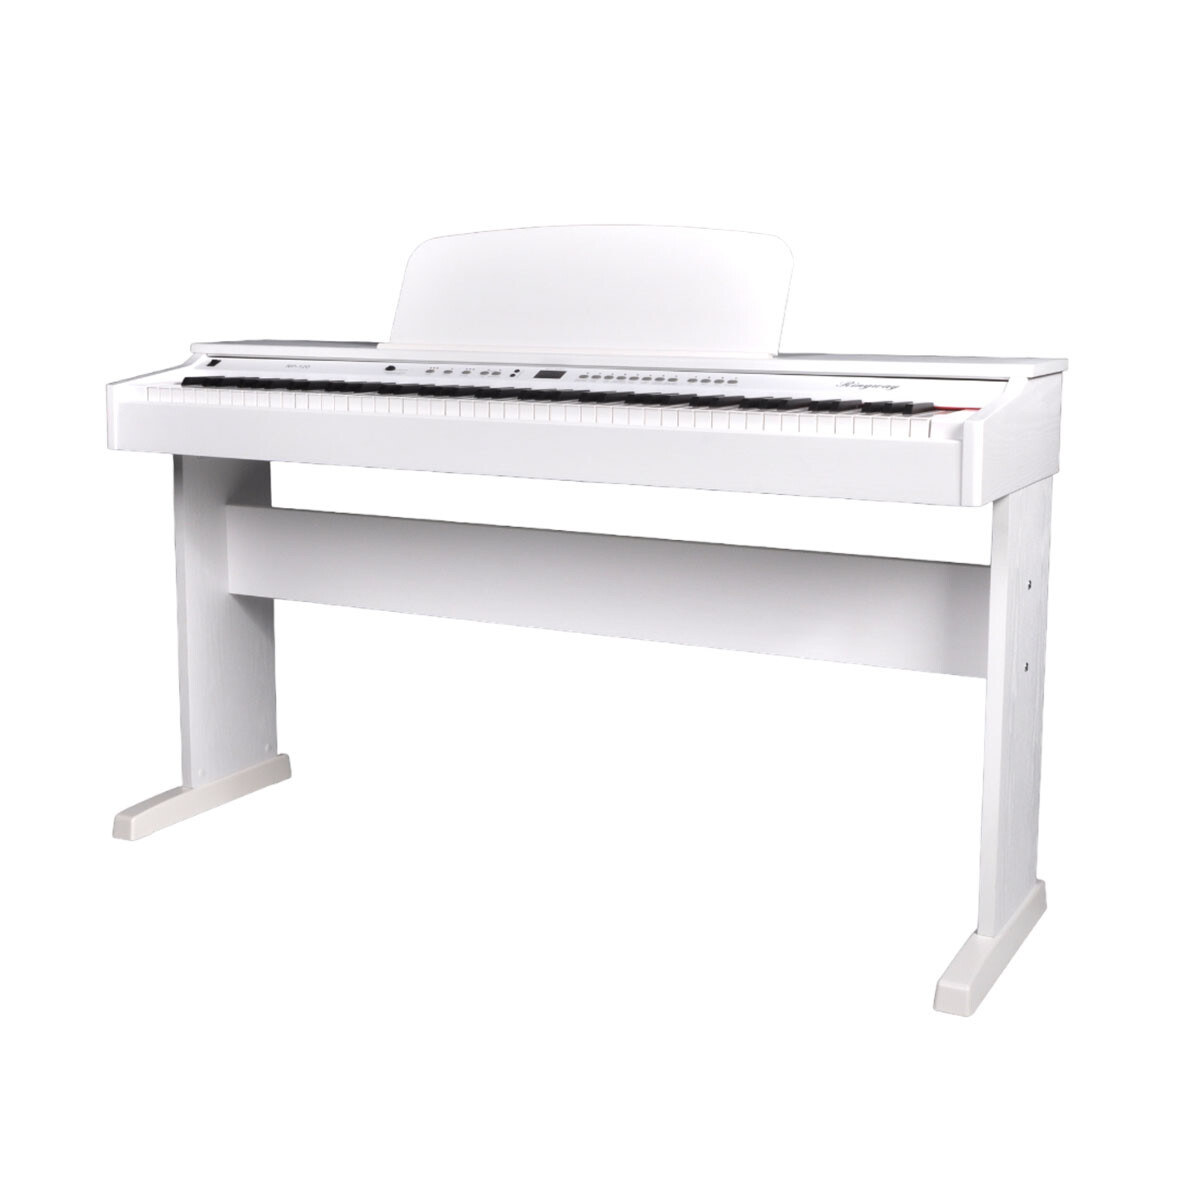 Piano Digital Ringway Rp120 White 